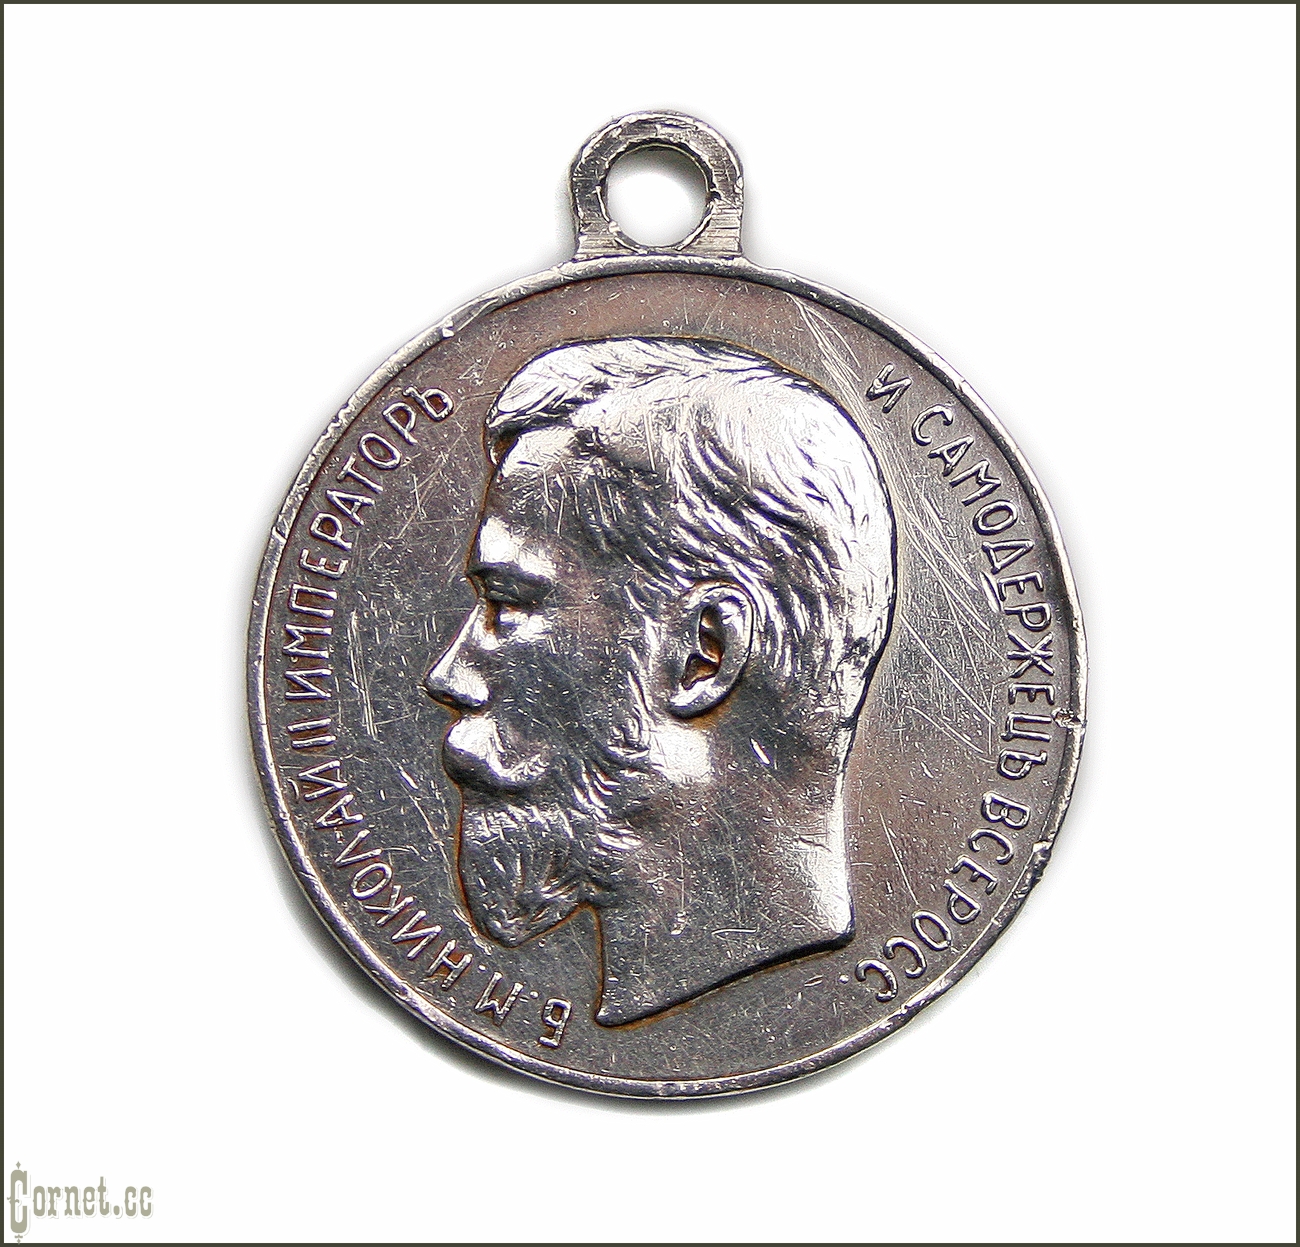 Medal "For Saving the Dead"